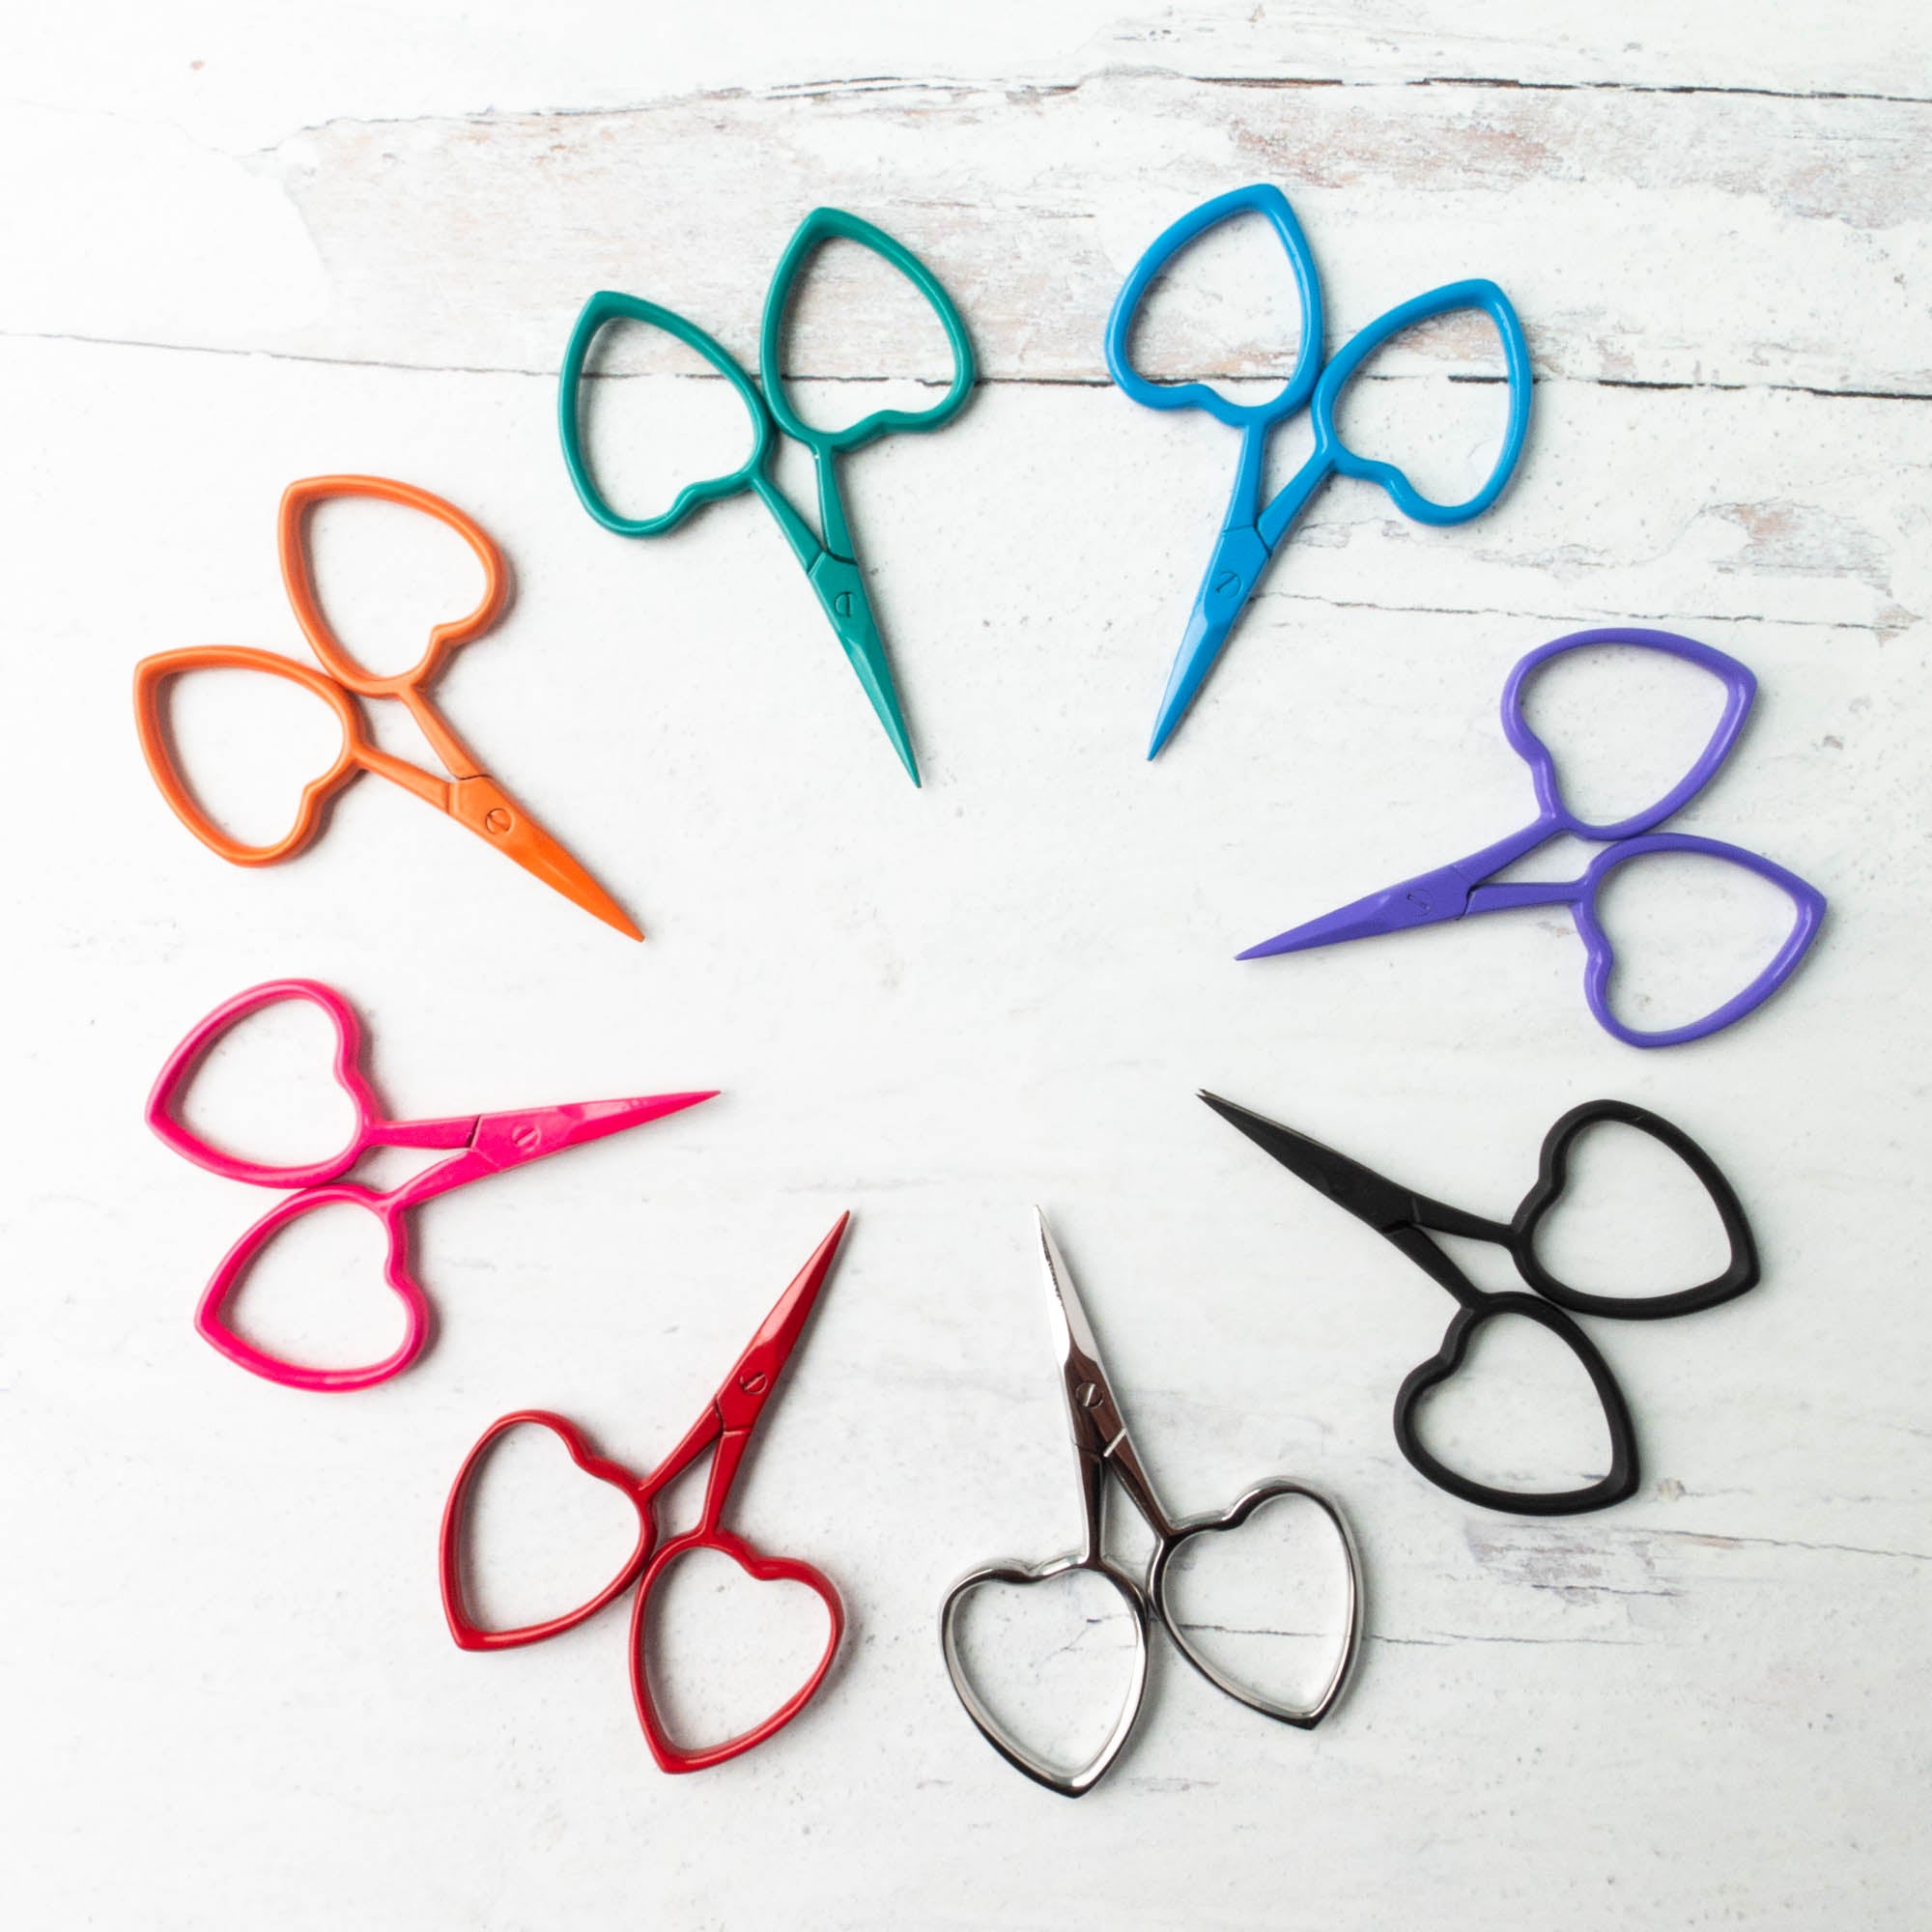 Embroidery Scissors - Colorful Mini Scissors - Shears - Ribbon Scissors -  Mini Scissor- Little Gems Embroidery Scissors - Final Sale